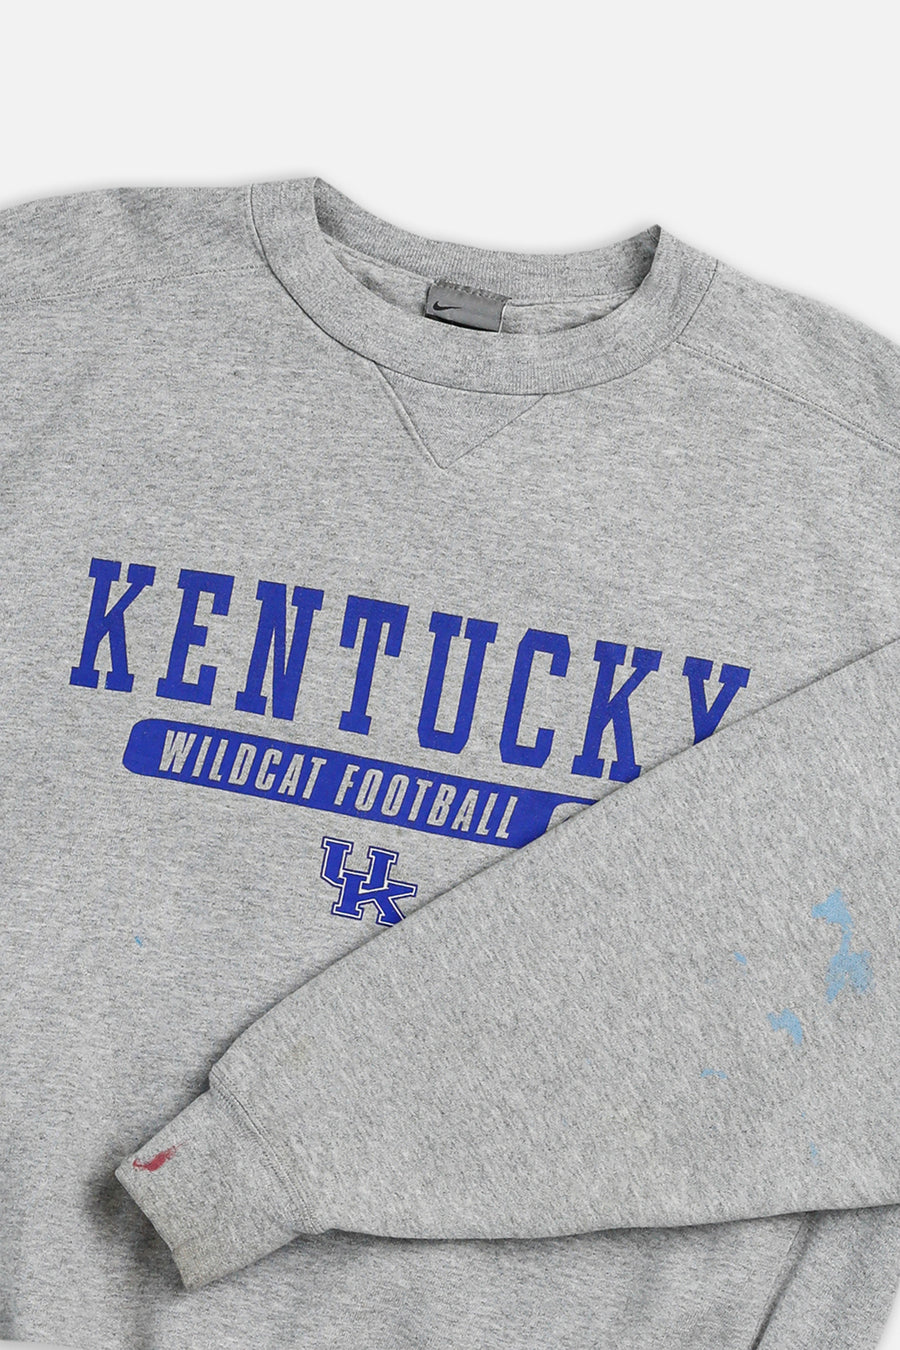 Vintage Kentucky Wildcats Nike Sweatshirt - S